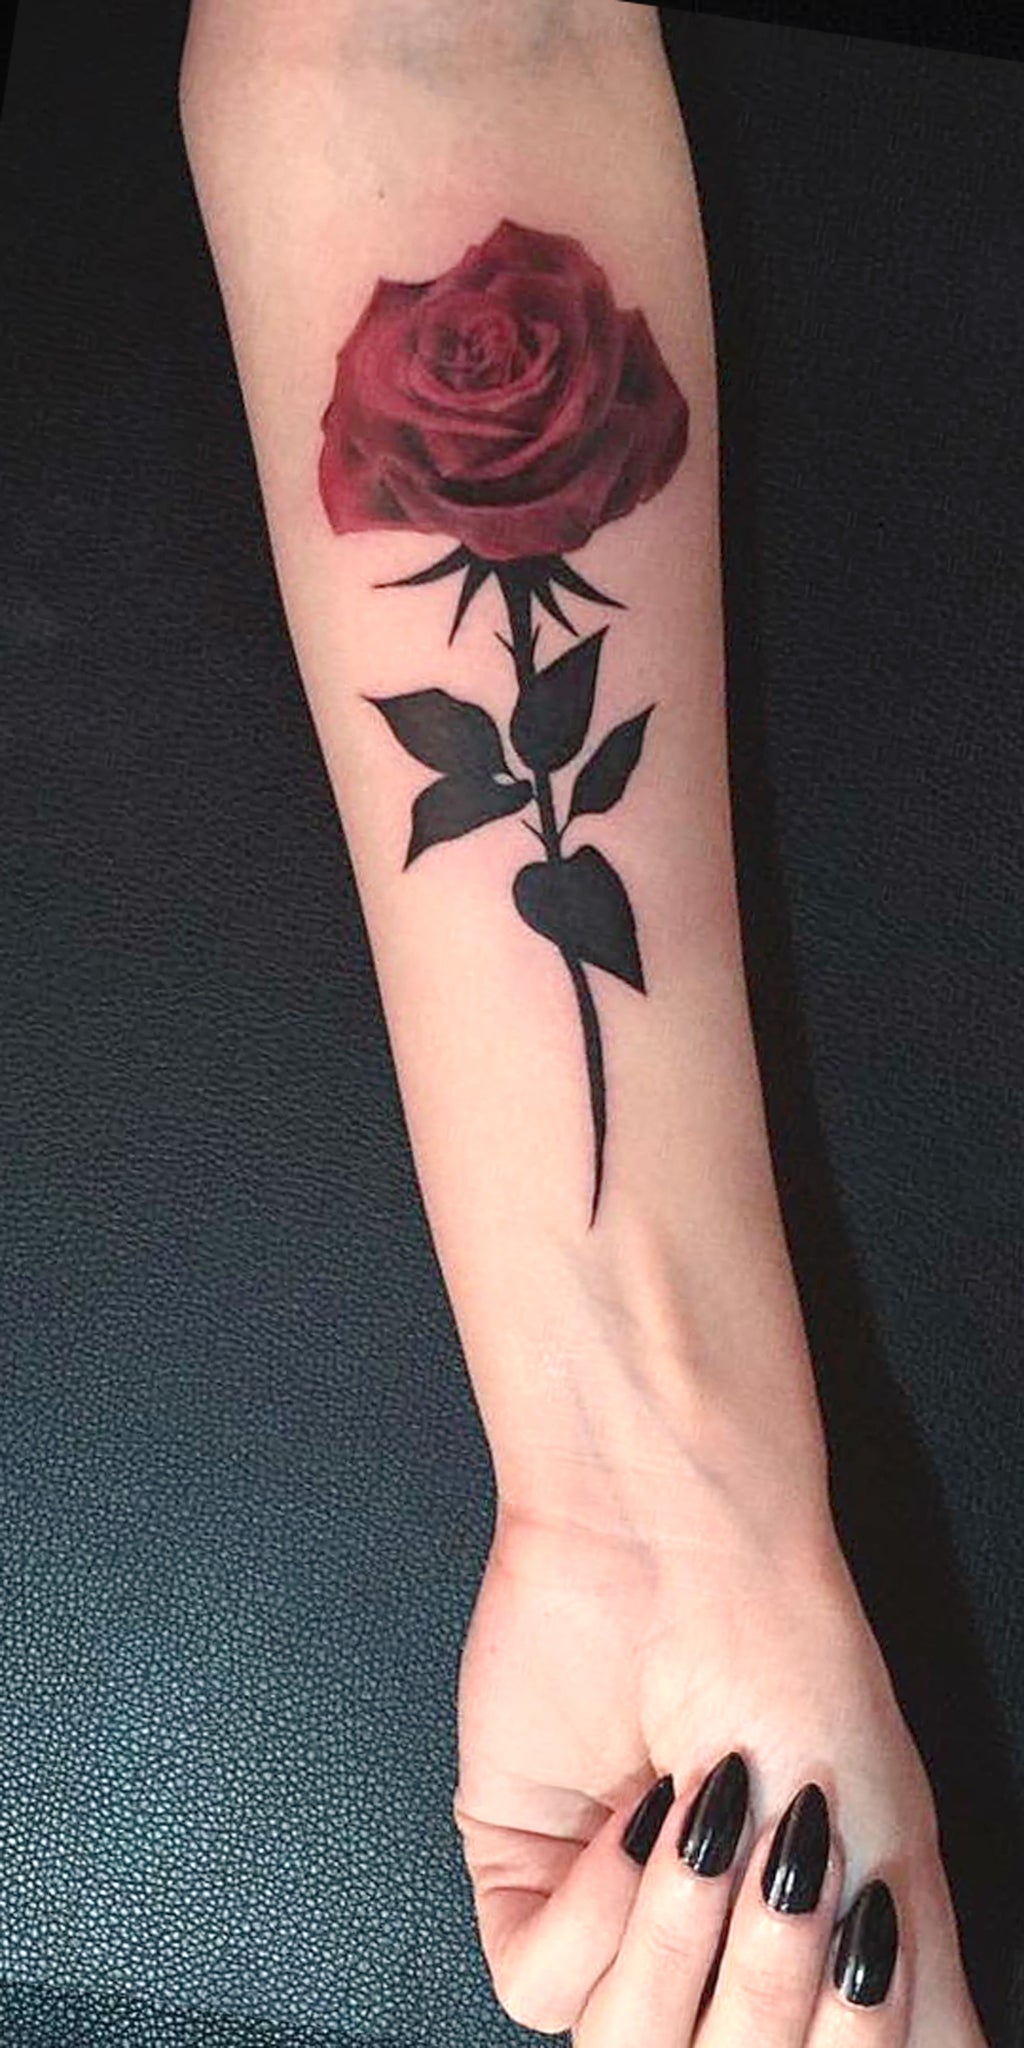 Single Red Rose Forearm Tattoo Ideas for Women - Flower Floral Wrist Arm Tat -  ideas únicas de tatuaje de antebrazo rosa -  www.MyBodiArt.com